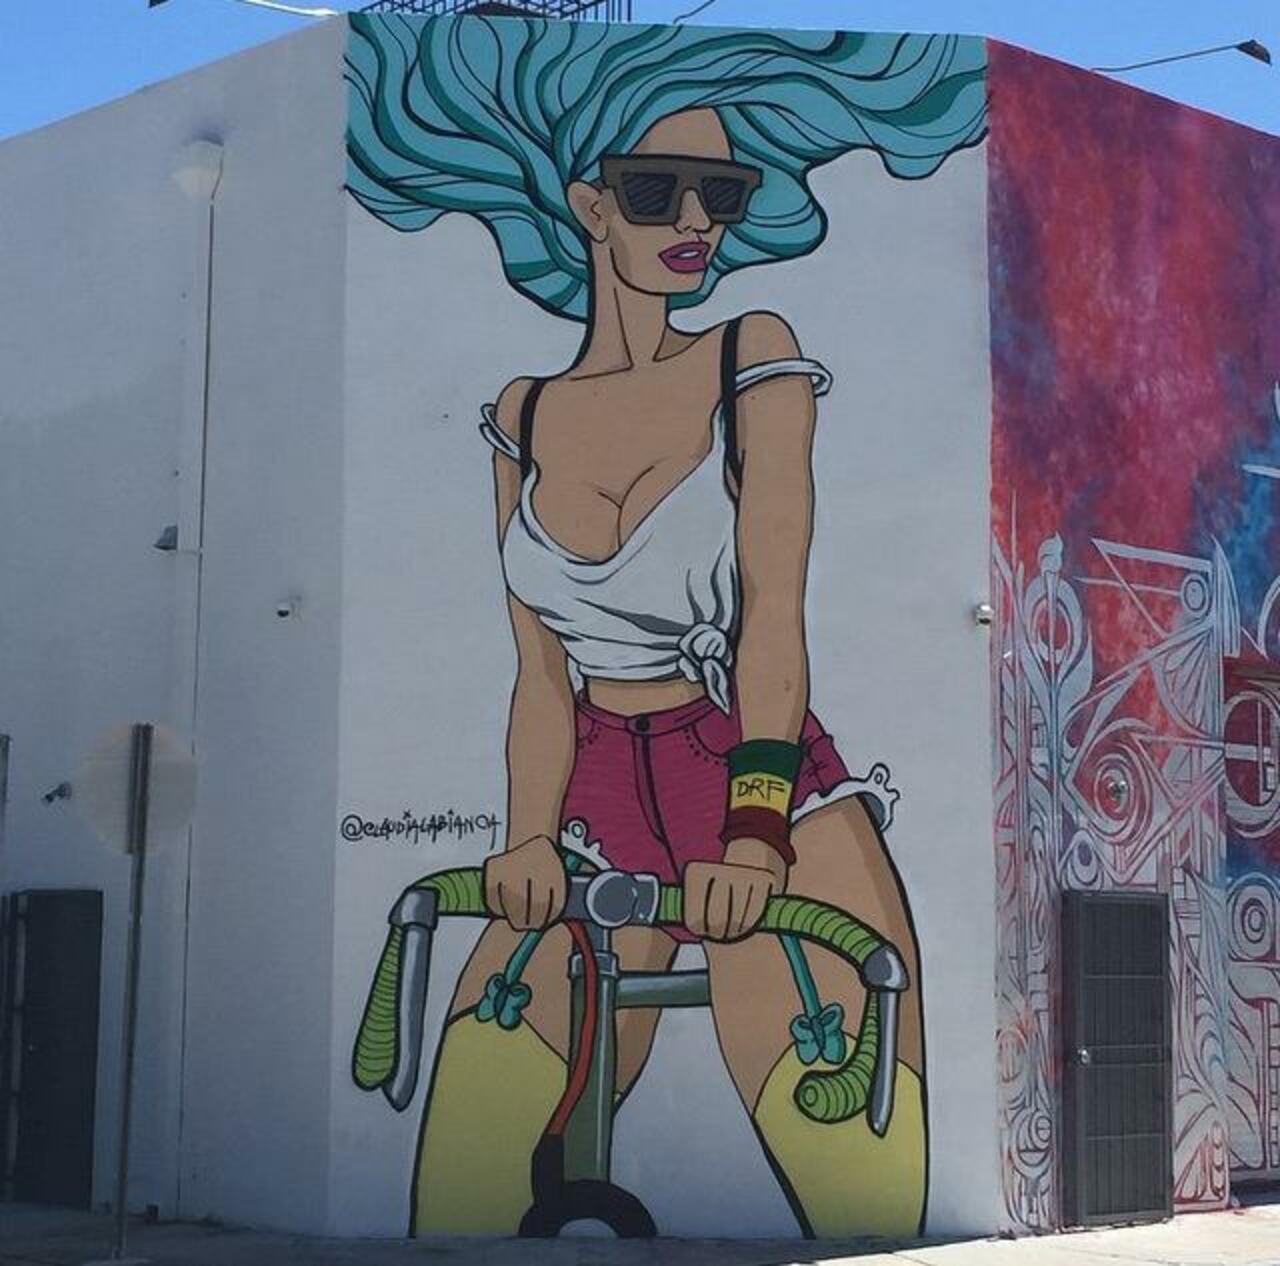 RT @GoogleStreetArt: Street Art by claudialabianca in Wynwood, Miami 

#srt #arte #graffiti #streetart http://t.co/v31bHcoYez